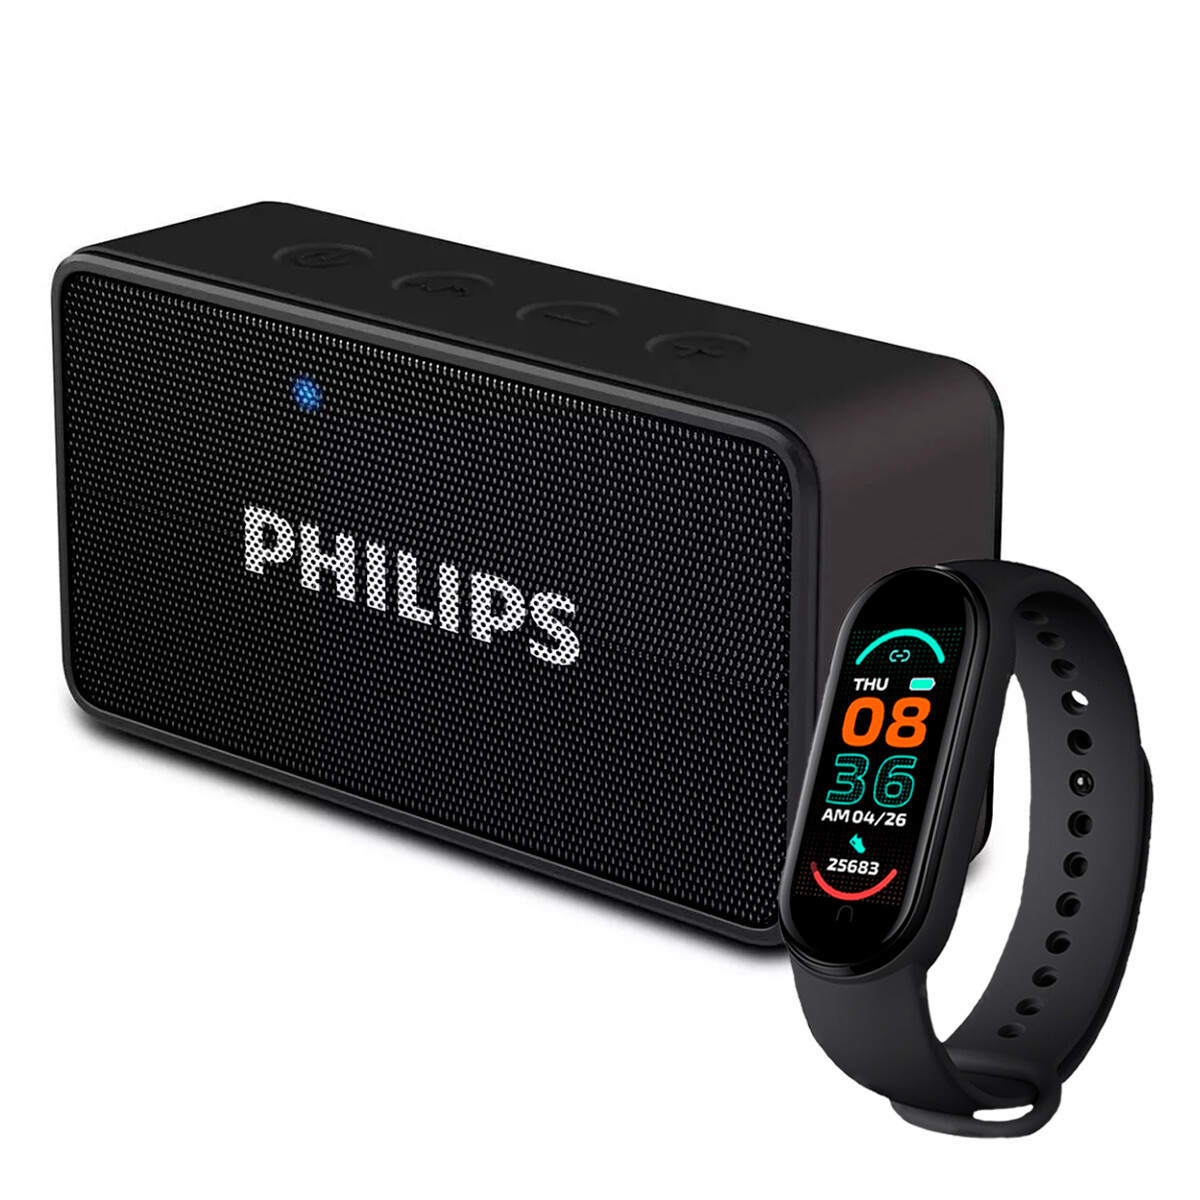 Parlante Inalambrico Philips Con Radio Sdbt60bk + Smartwatch 